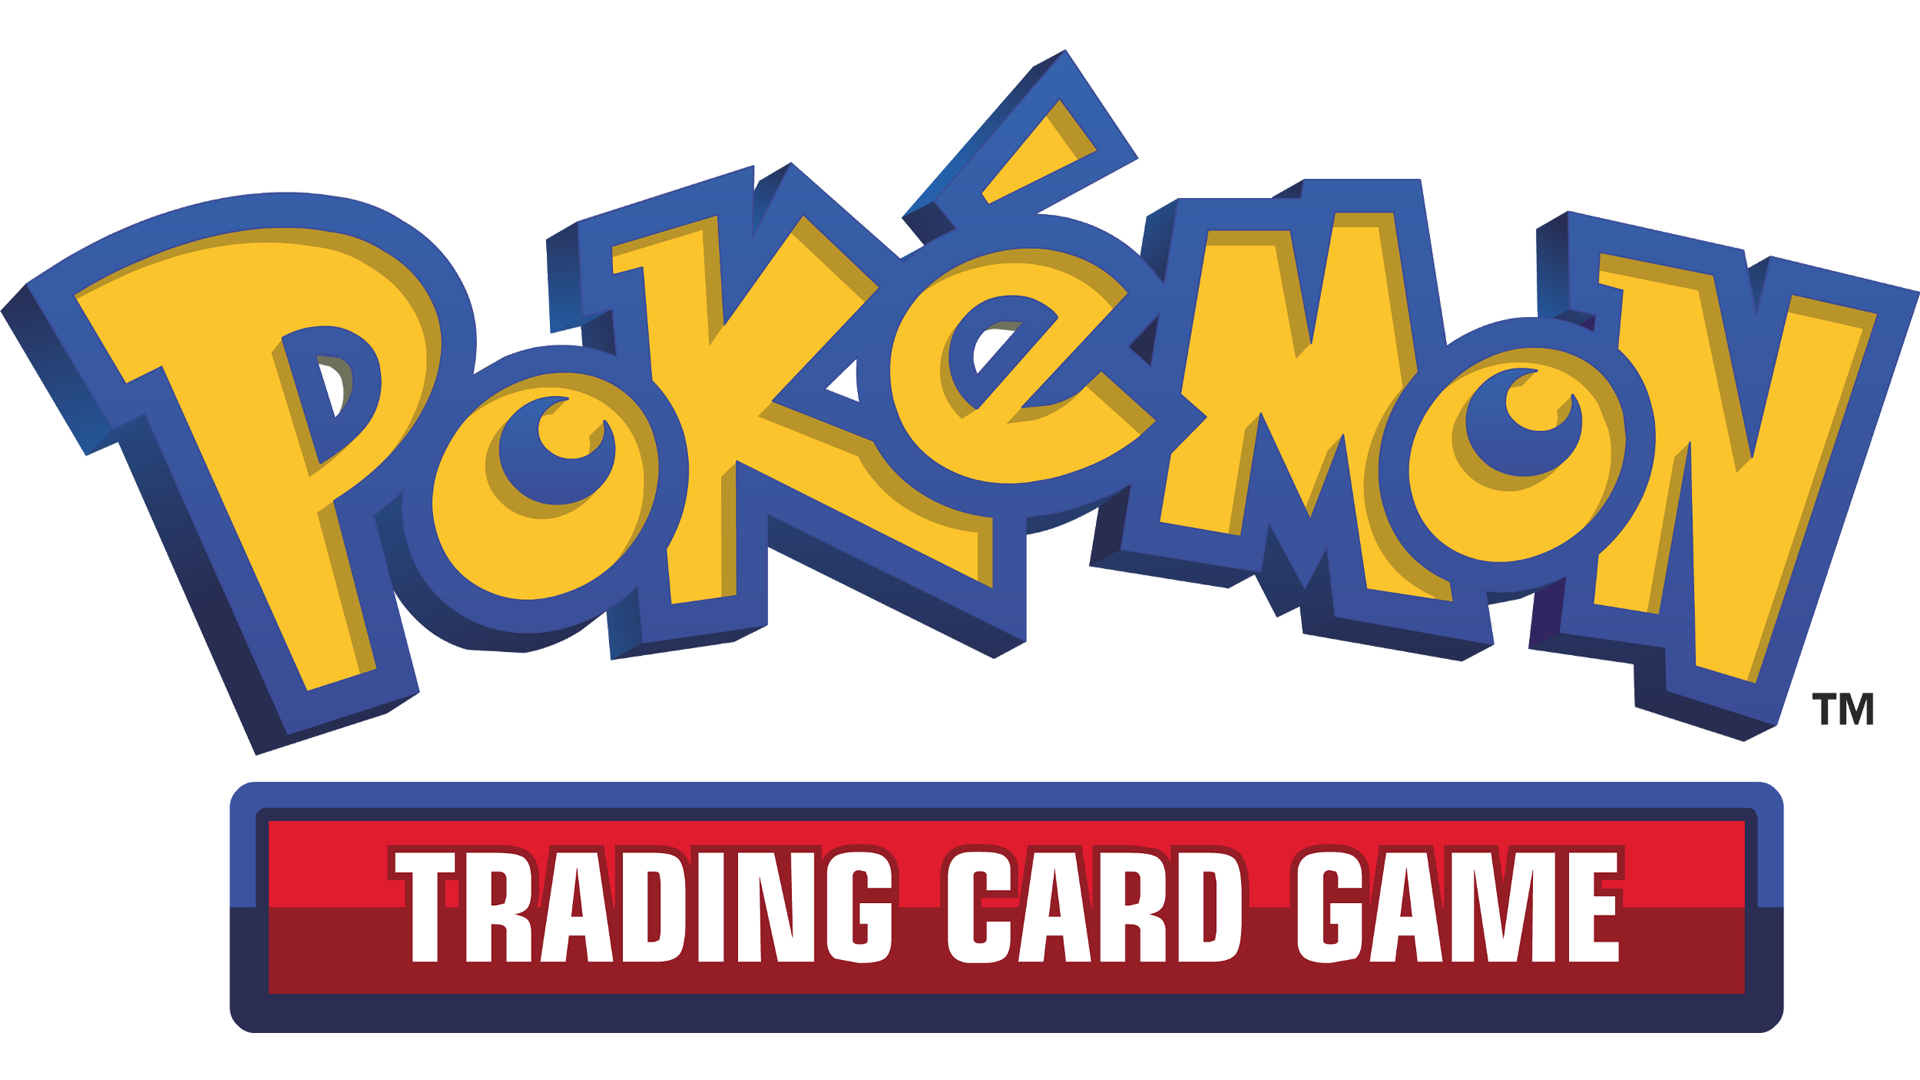 Pokémon Trading Card Game Logo